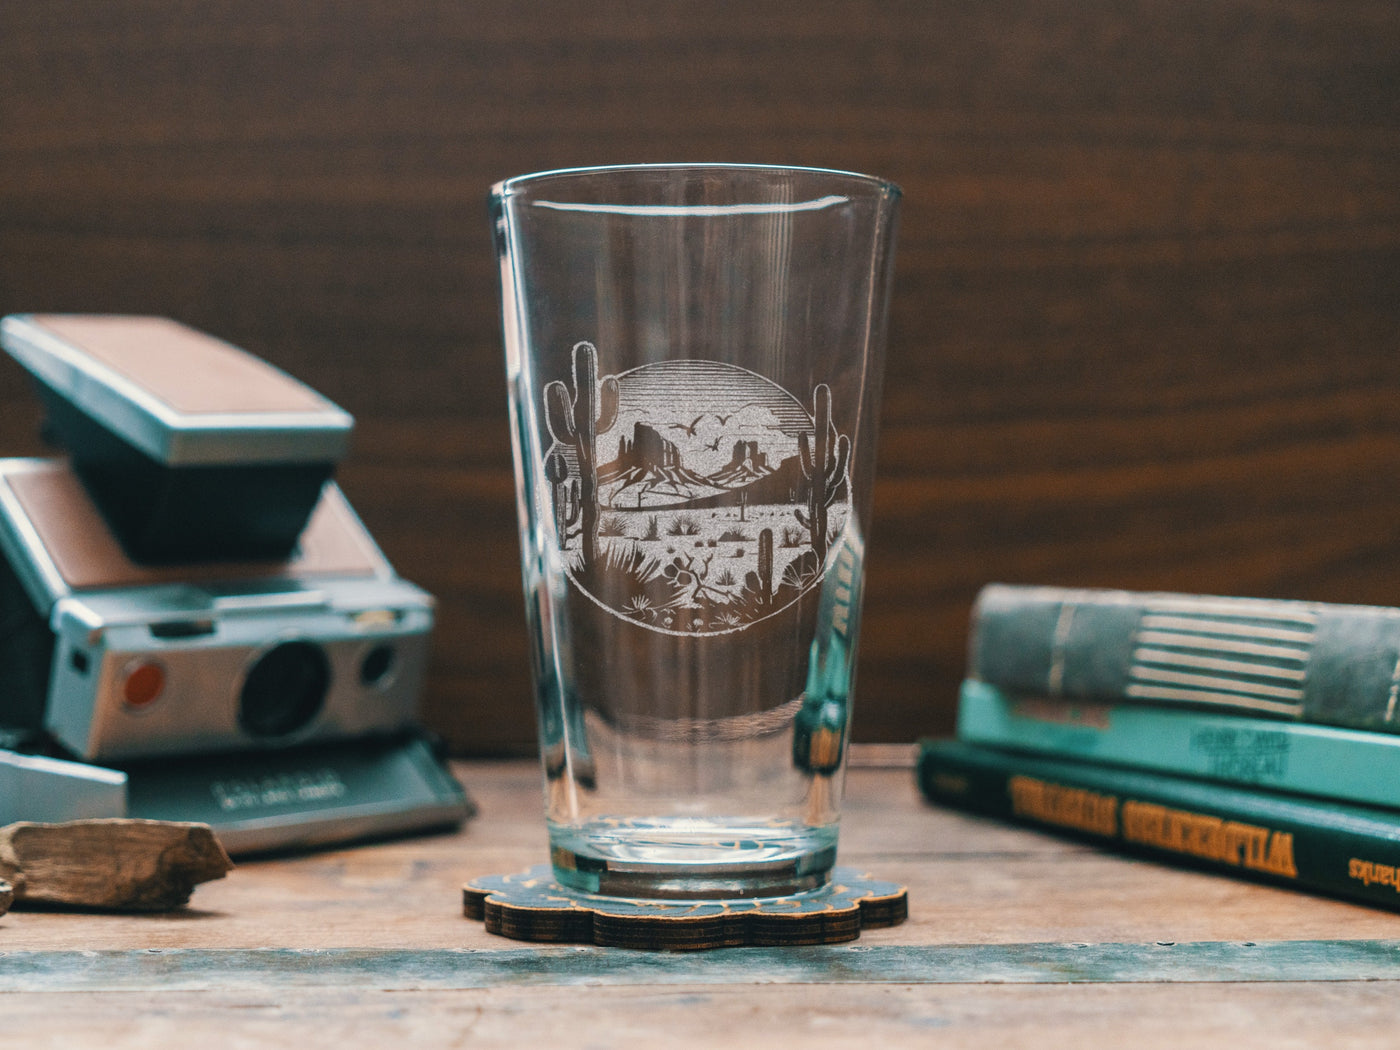 Western Landscape Scene Glasses | Personalized etched glassware for beer, whiskey, wine & cocktails. Western Desert Ranch Southwestern Decor